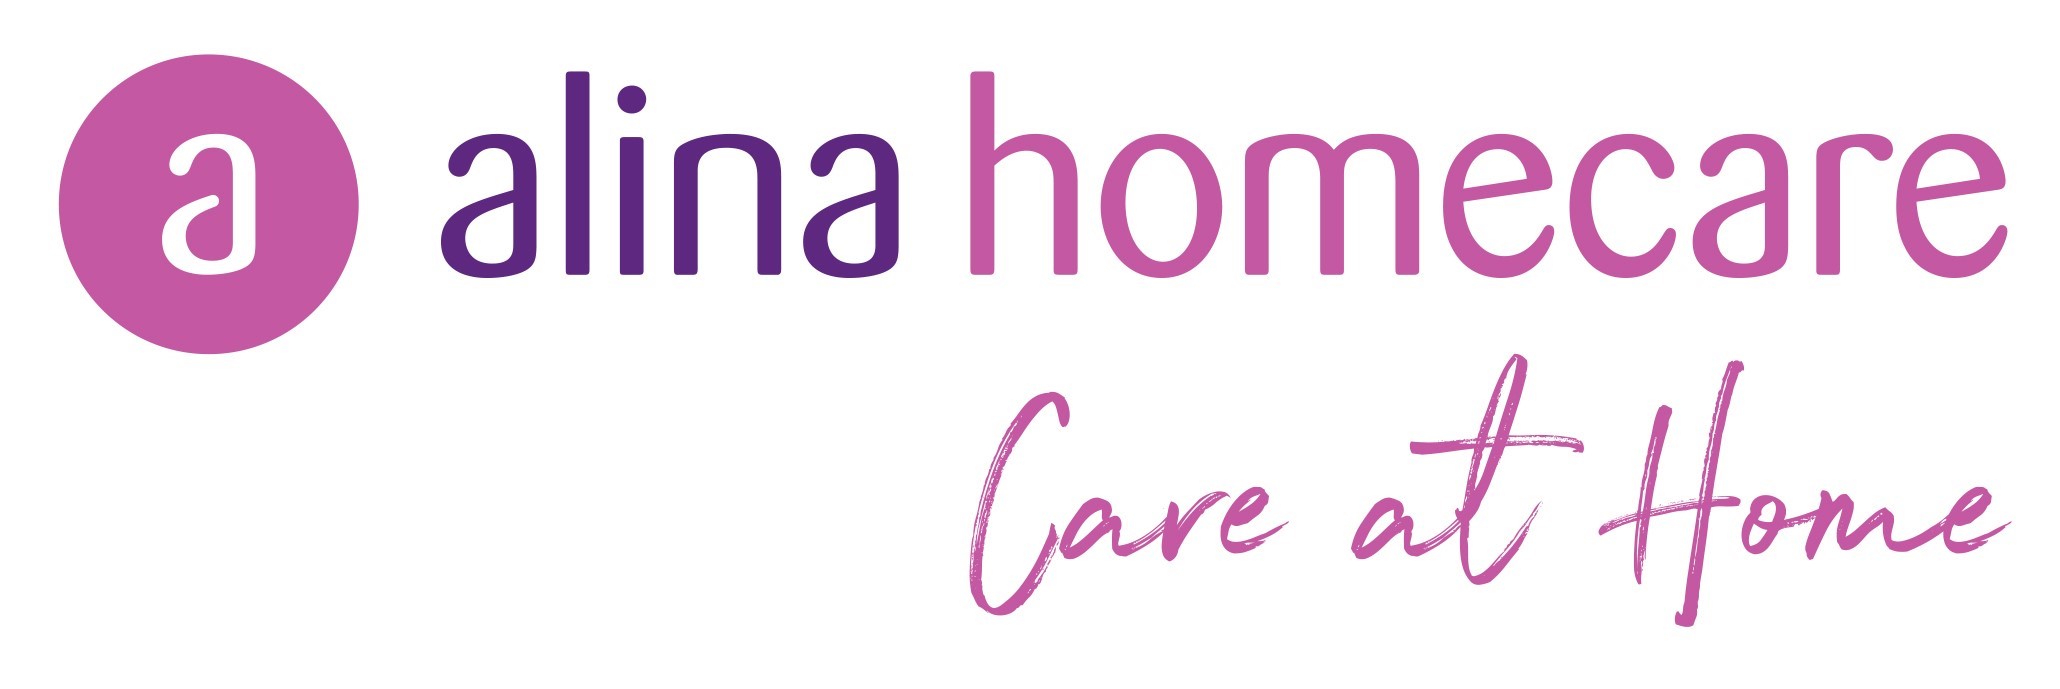 Alina Homecare Live In Care - Live In Care